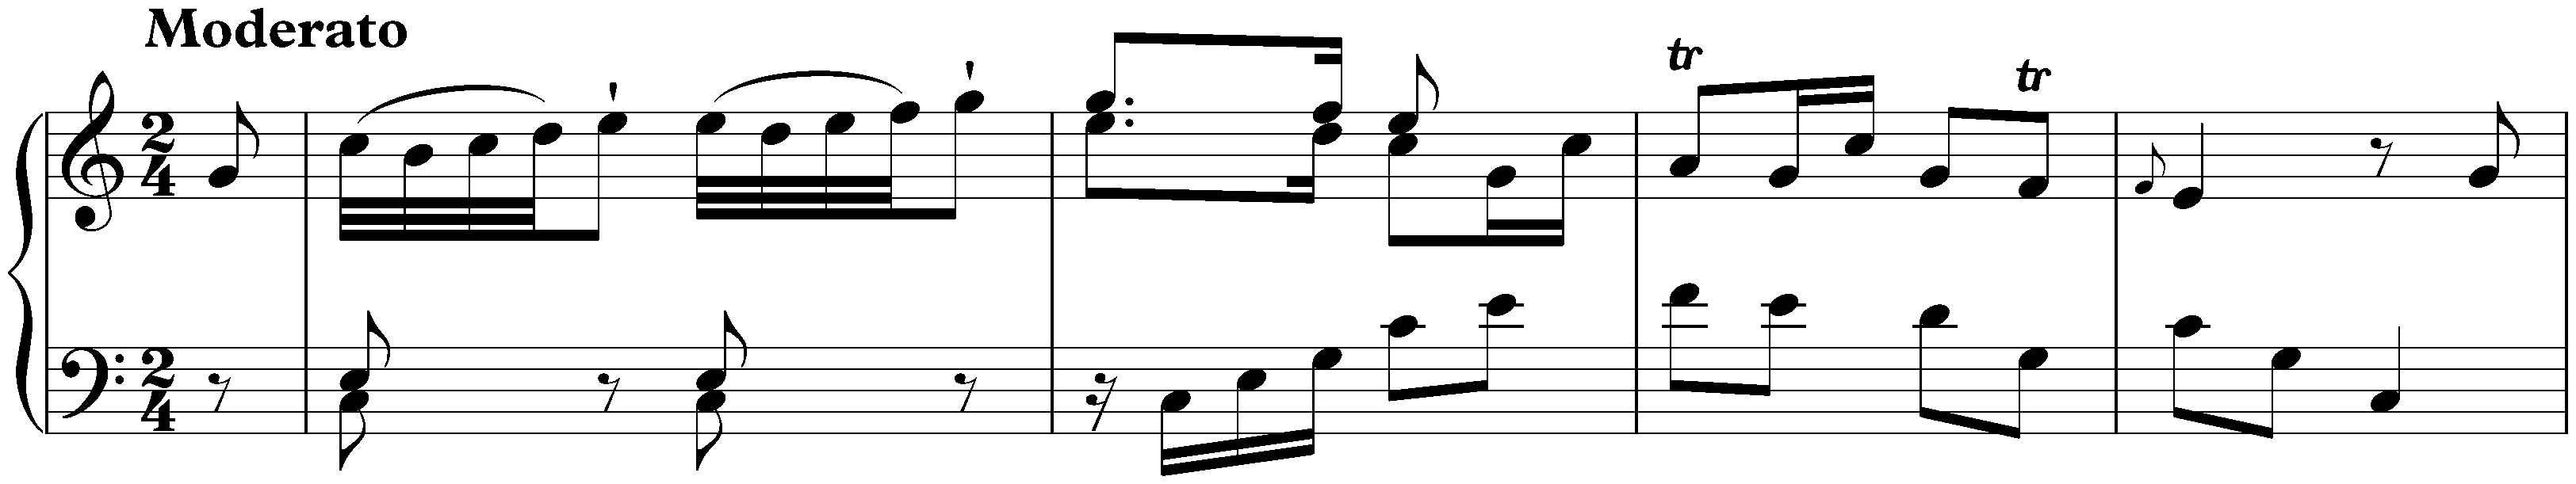 Sonata in C major, Hob. XVI:10; 1. Moderato